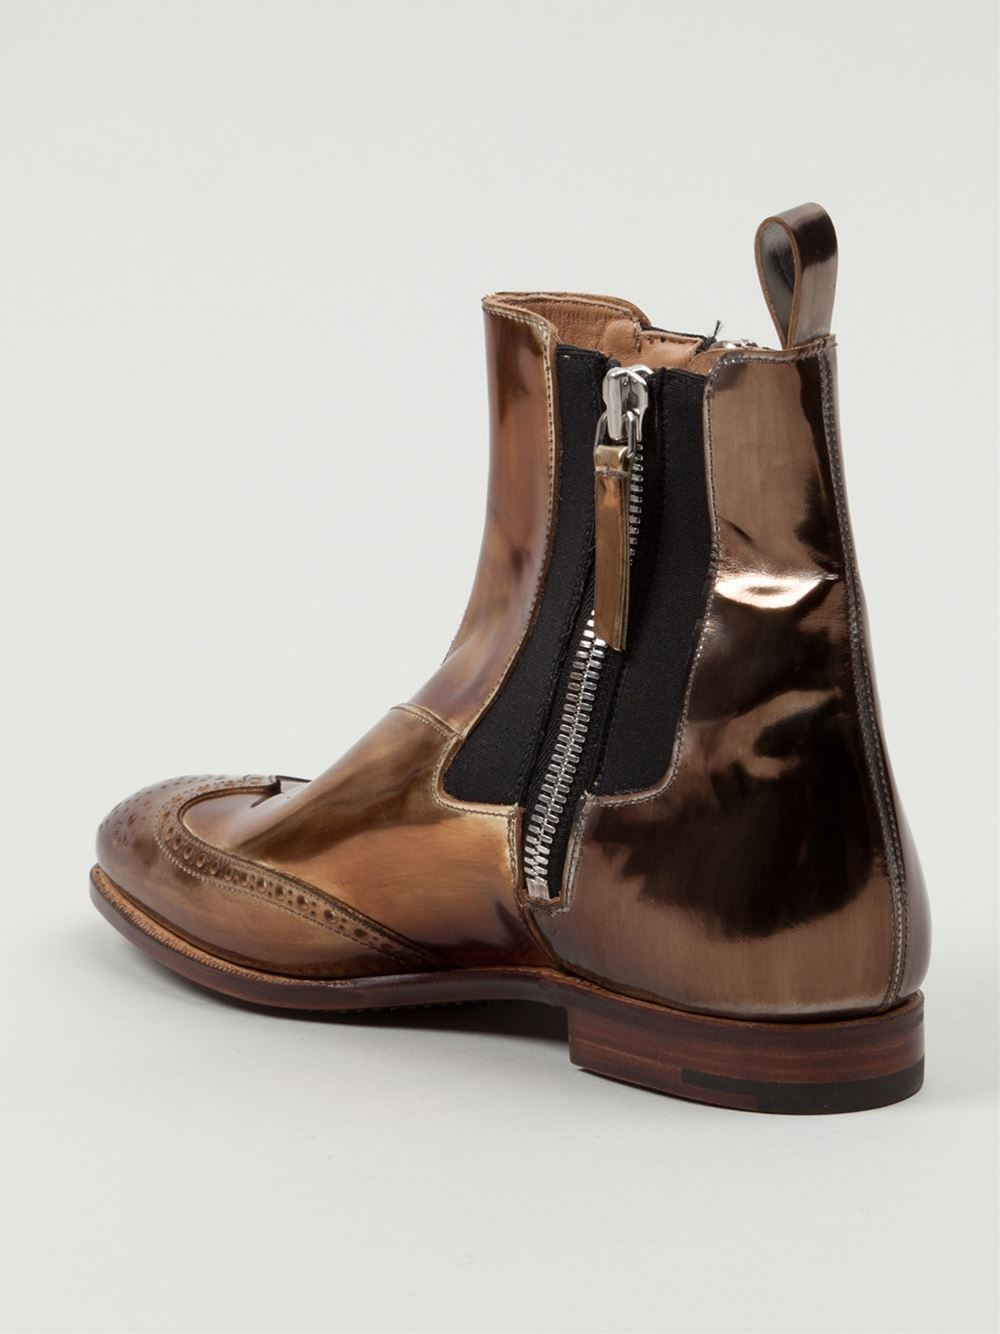 Lyst - Premiata Metallic Chelsea Boots in Metallic for Men